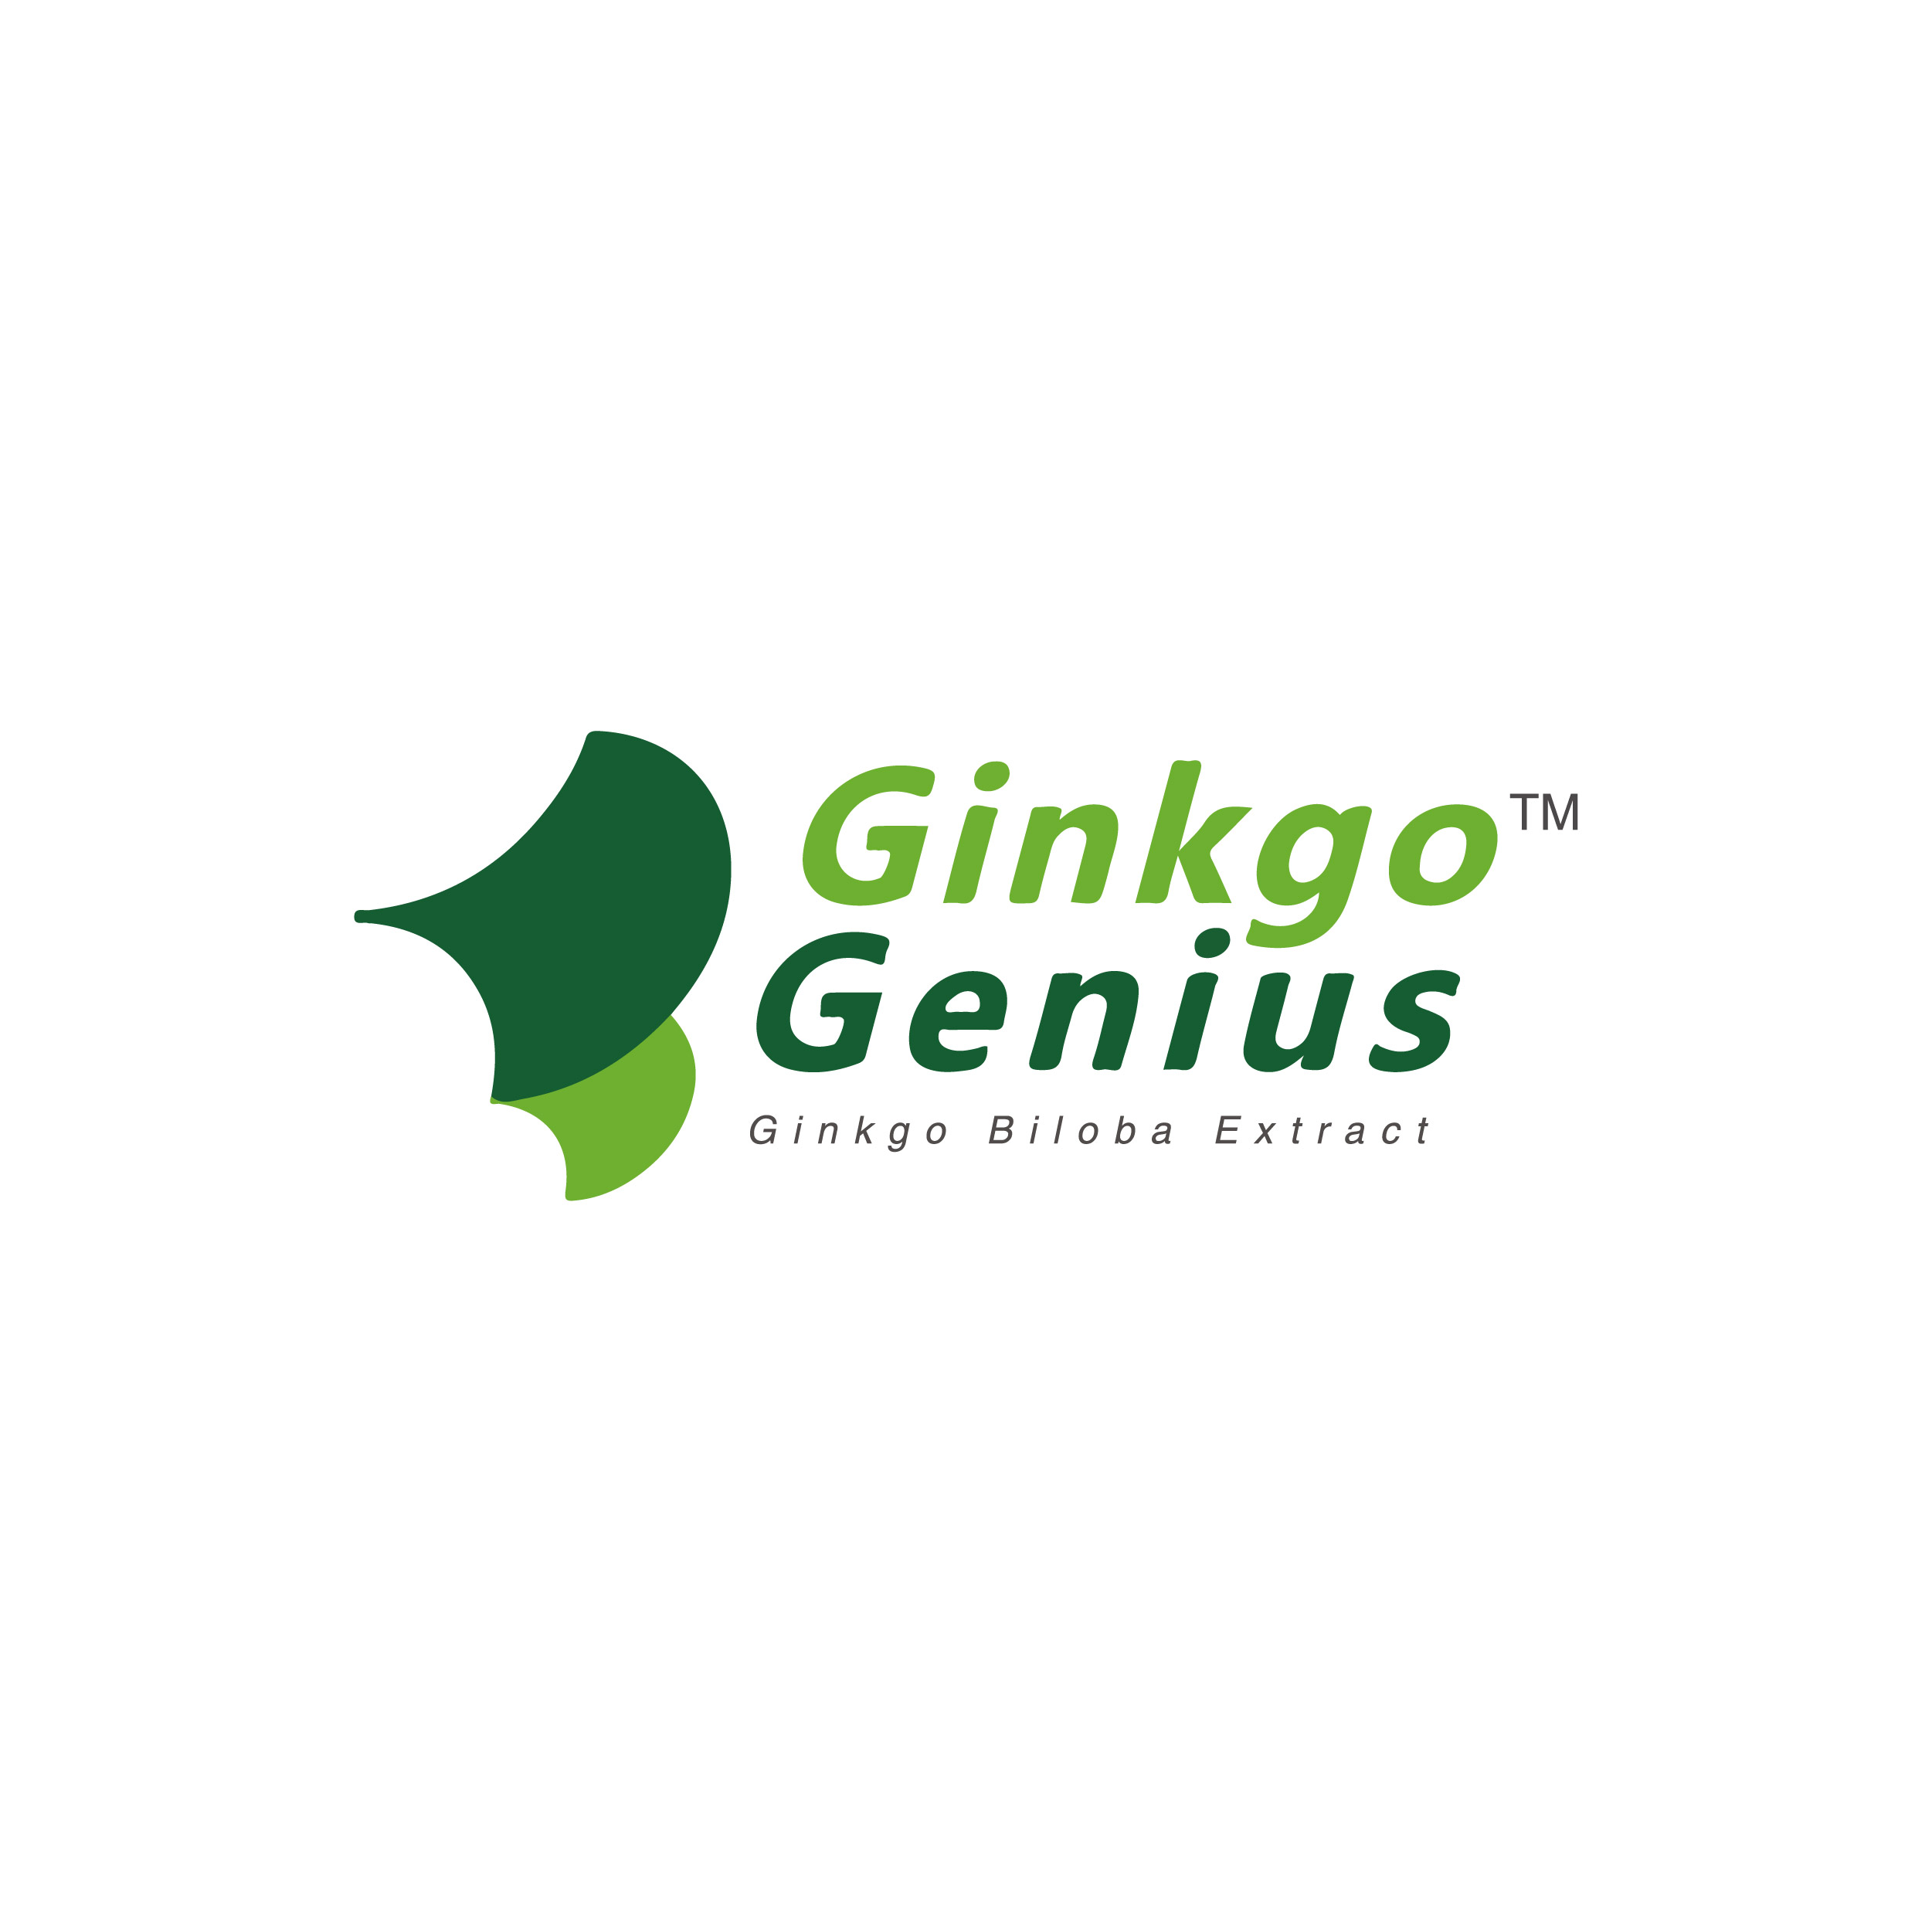 Ginkgo Genius